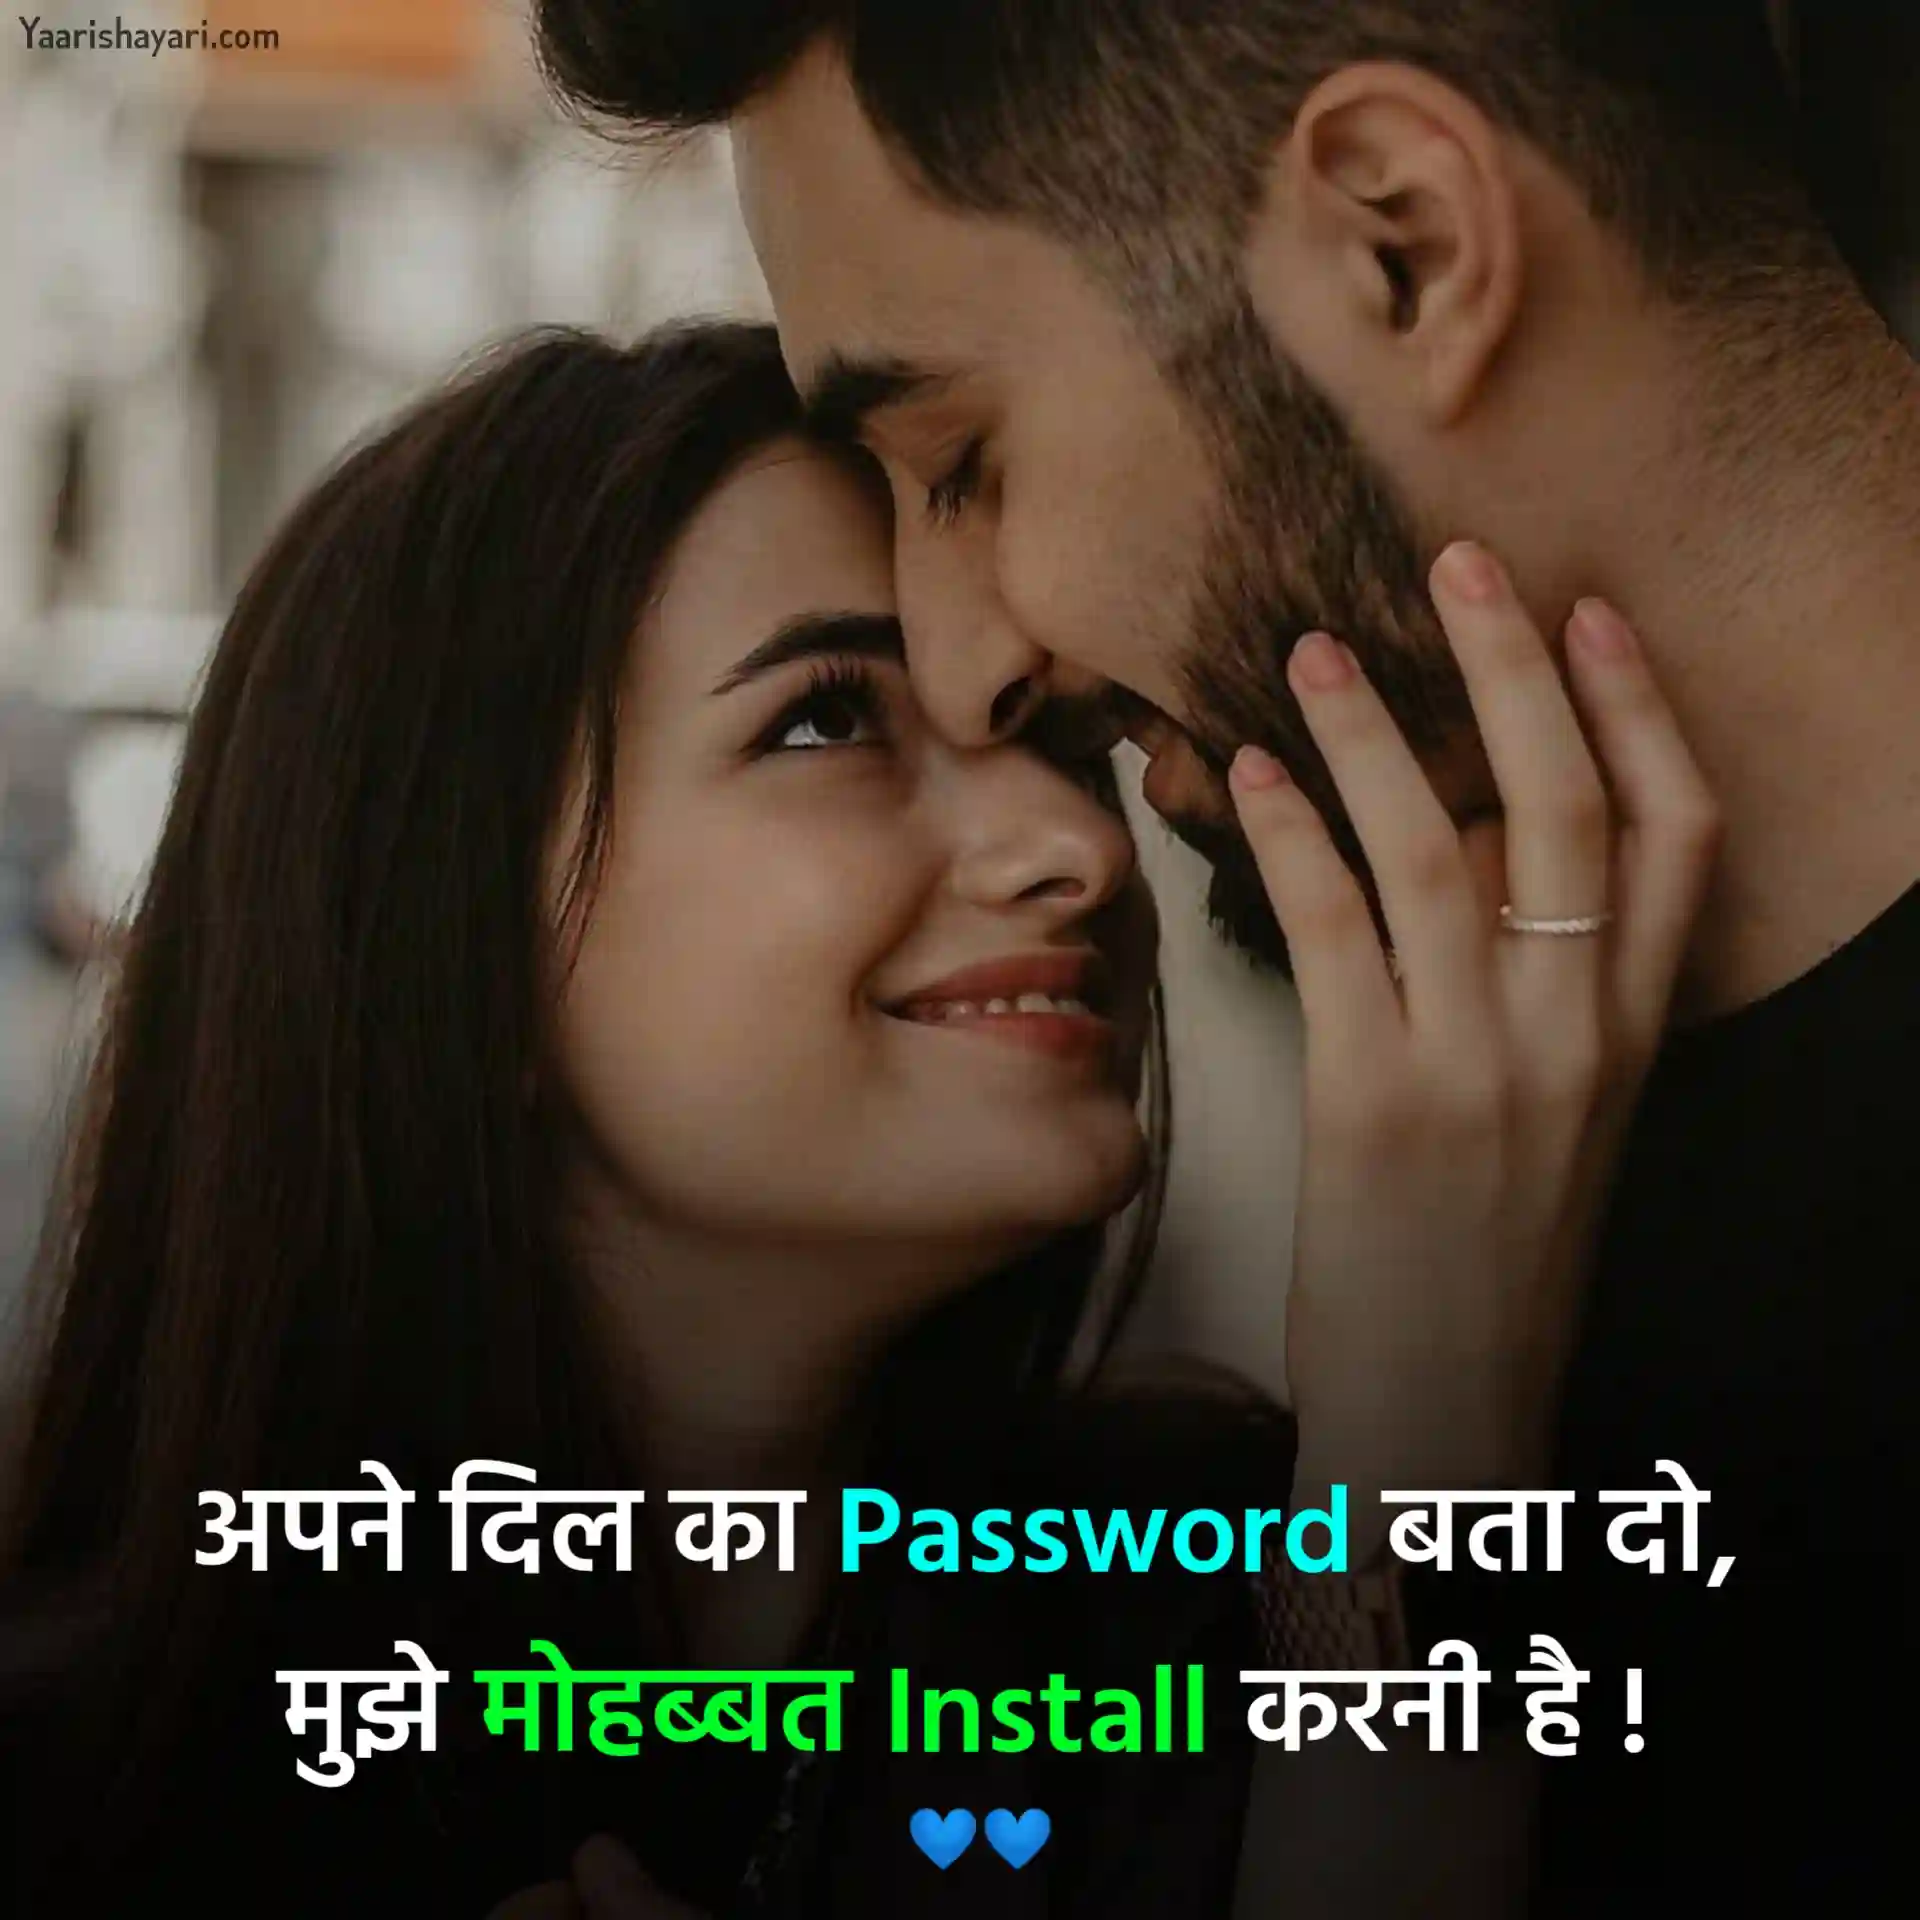 2 Line Love in Hindi Image